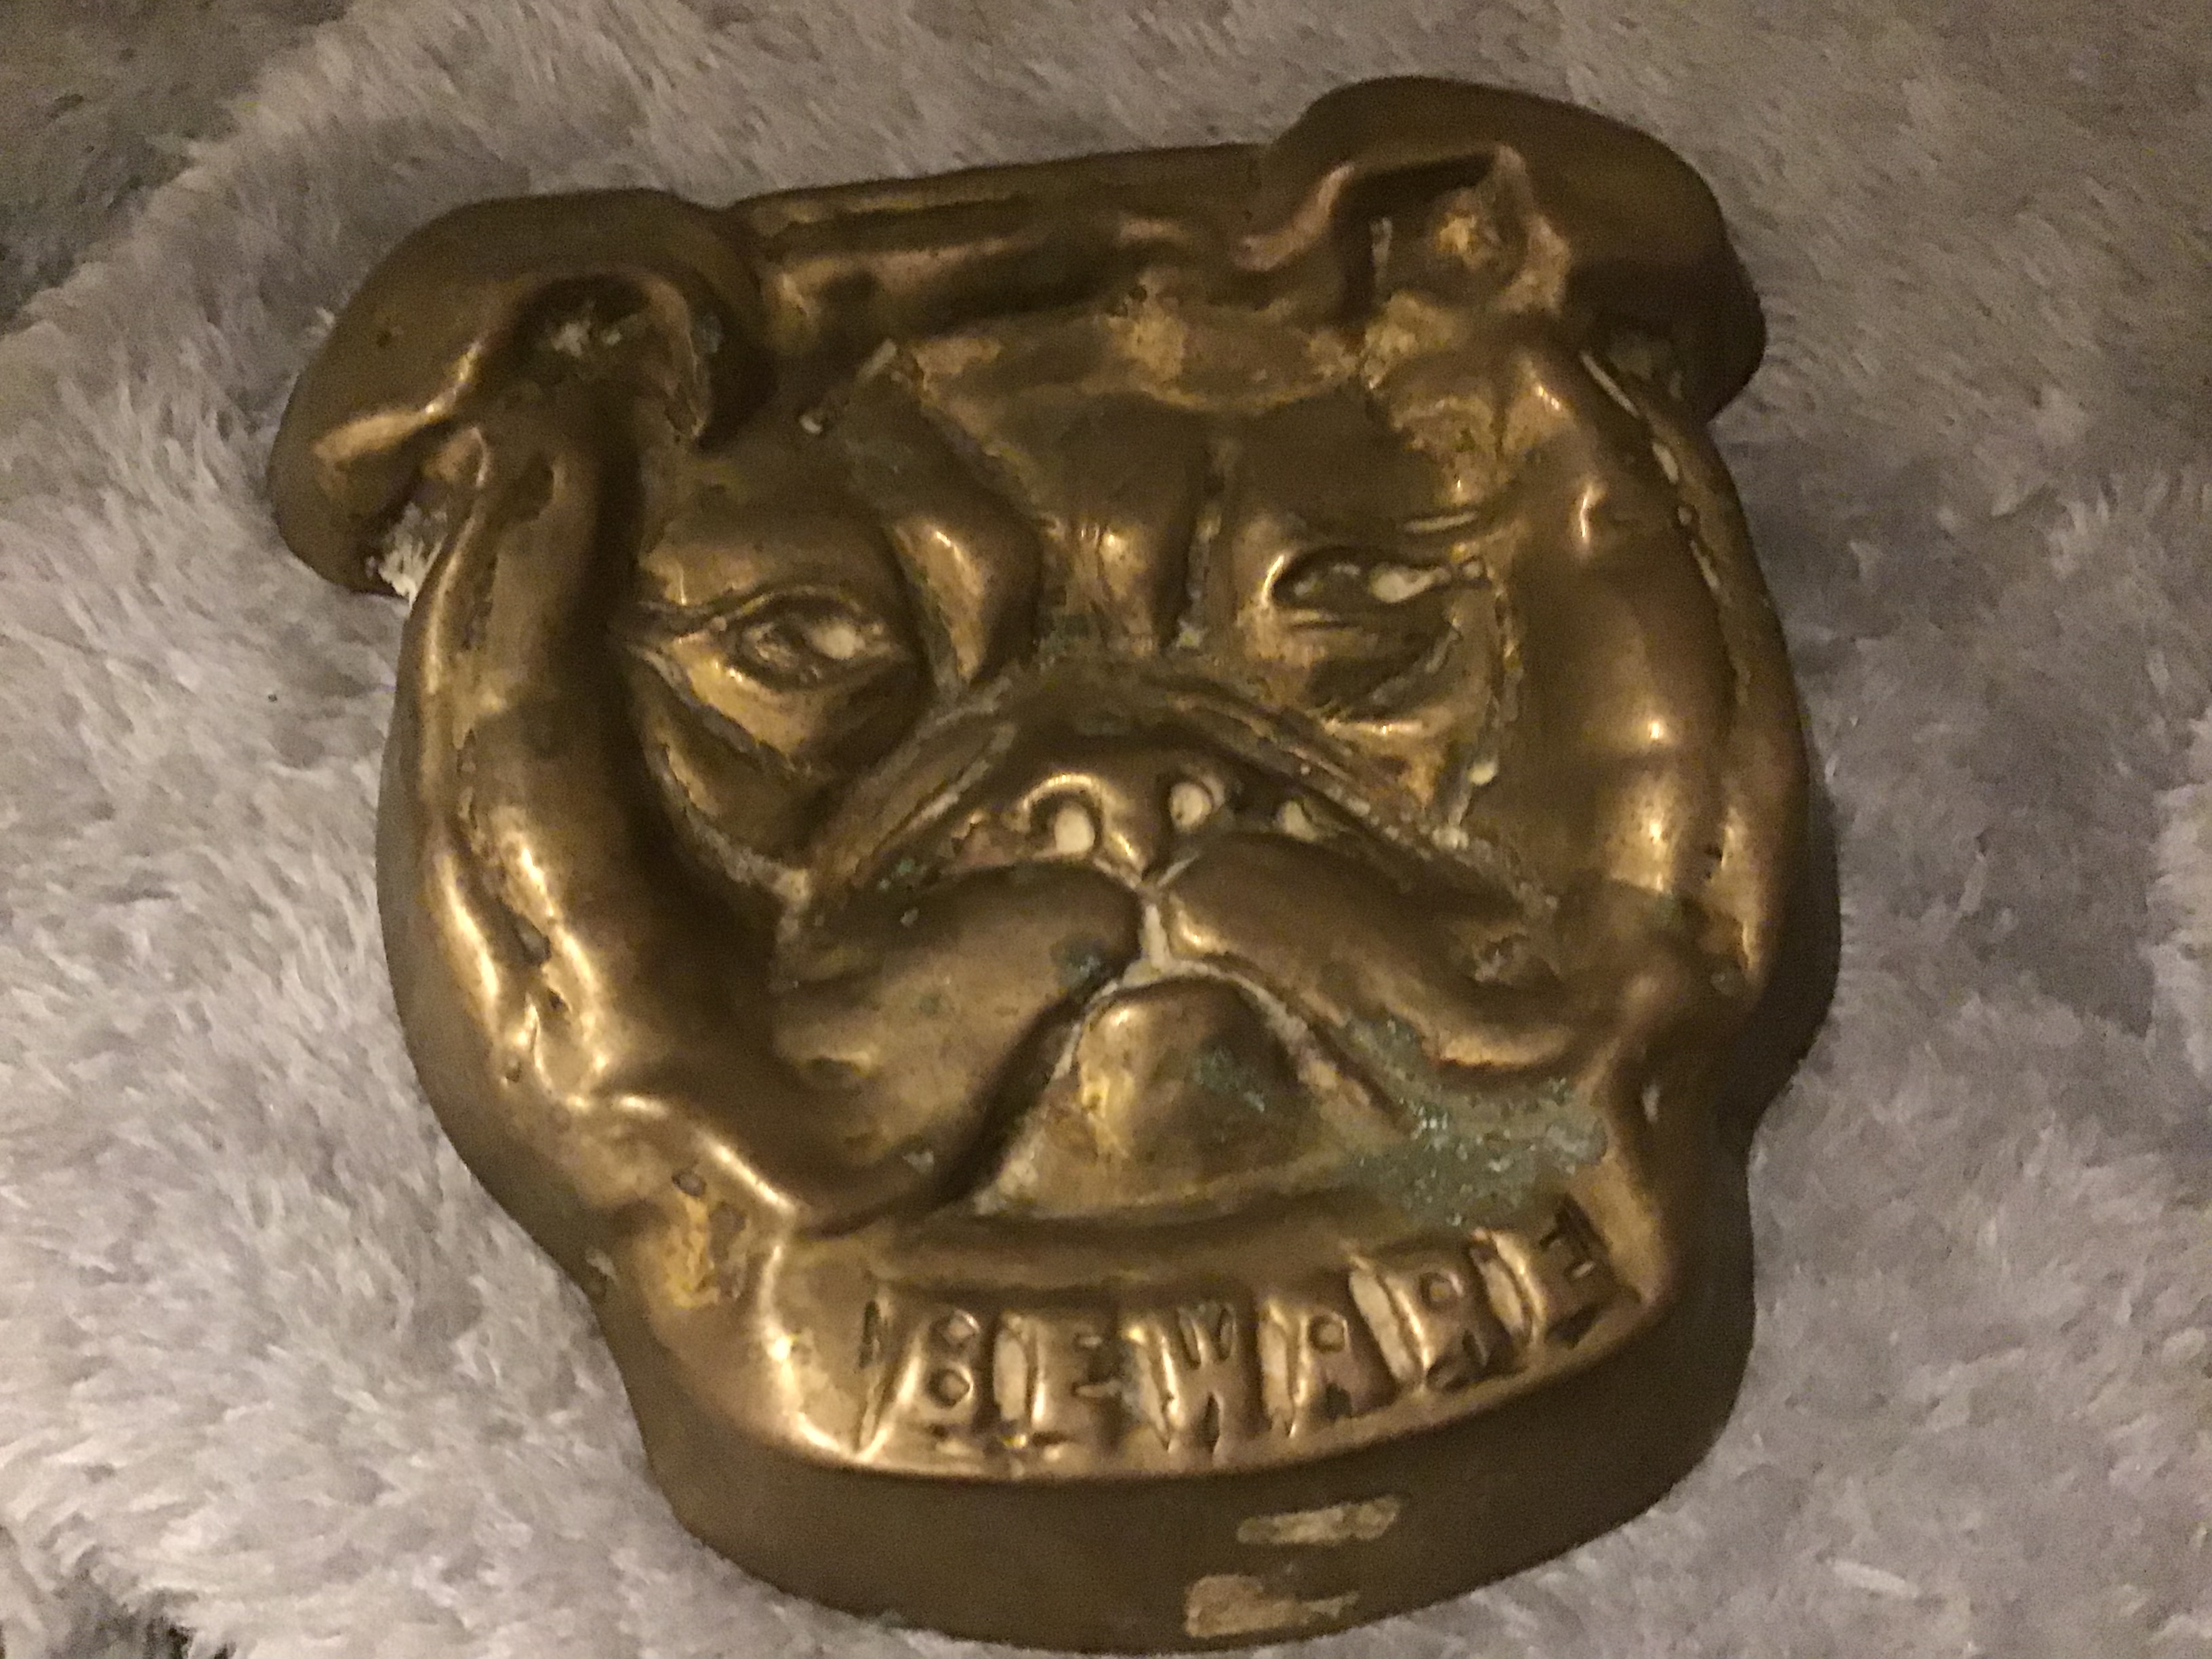 Heads up for more Bulldog memorabilia